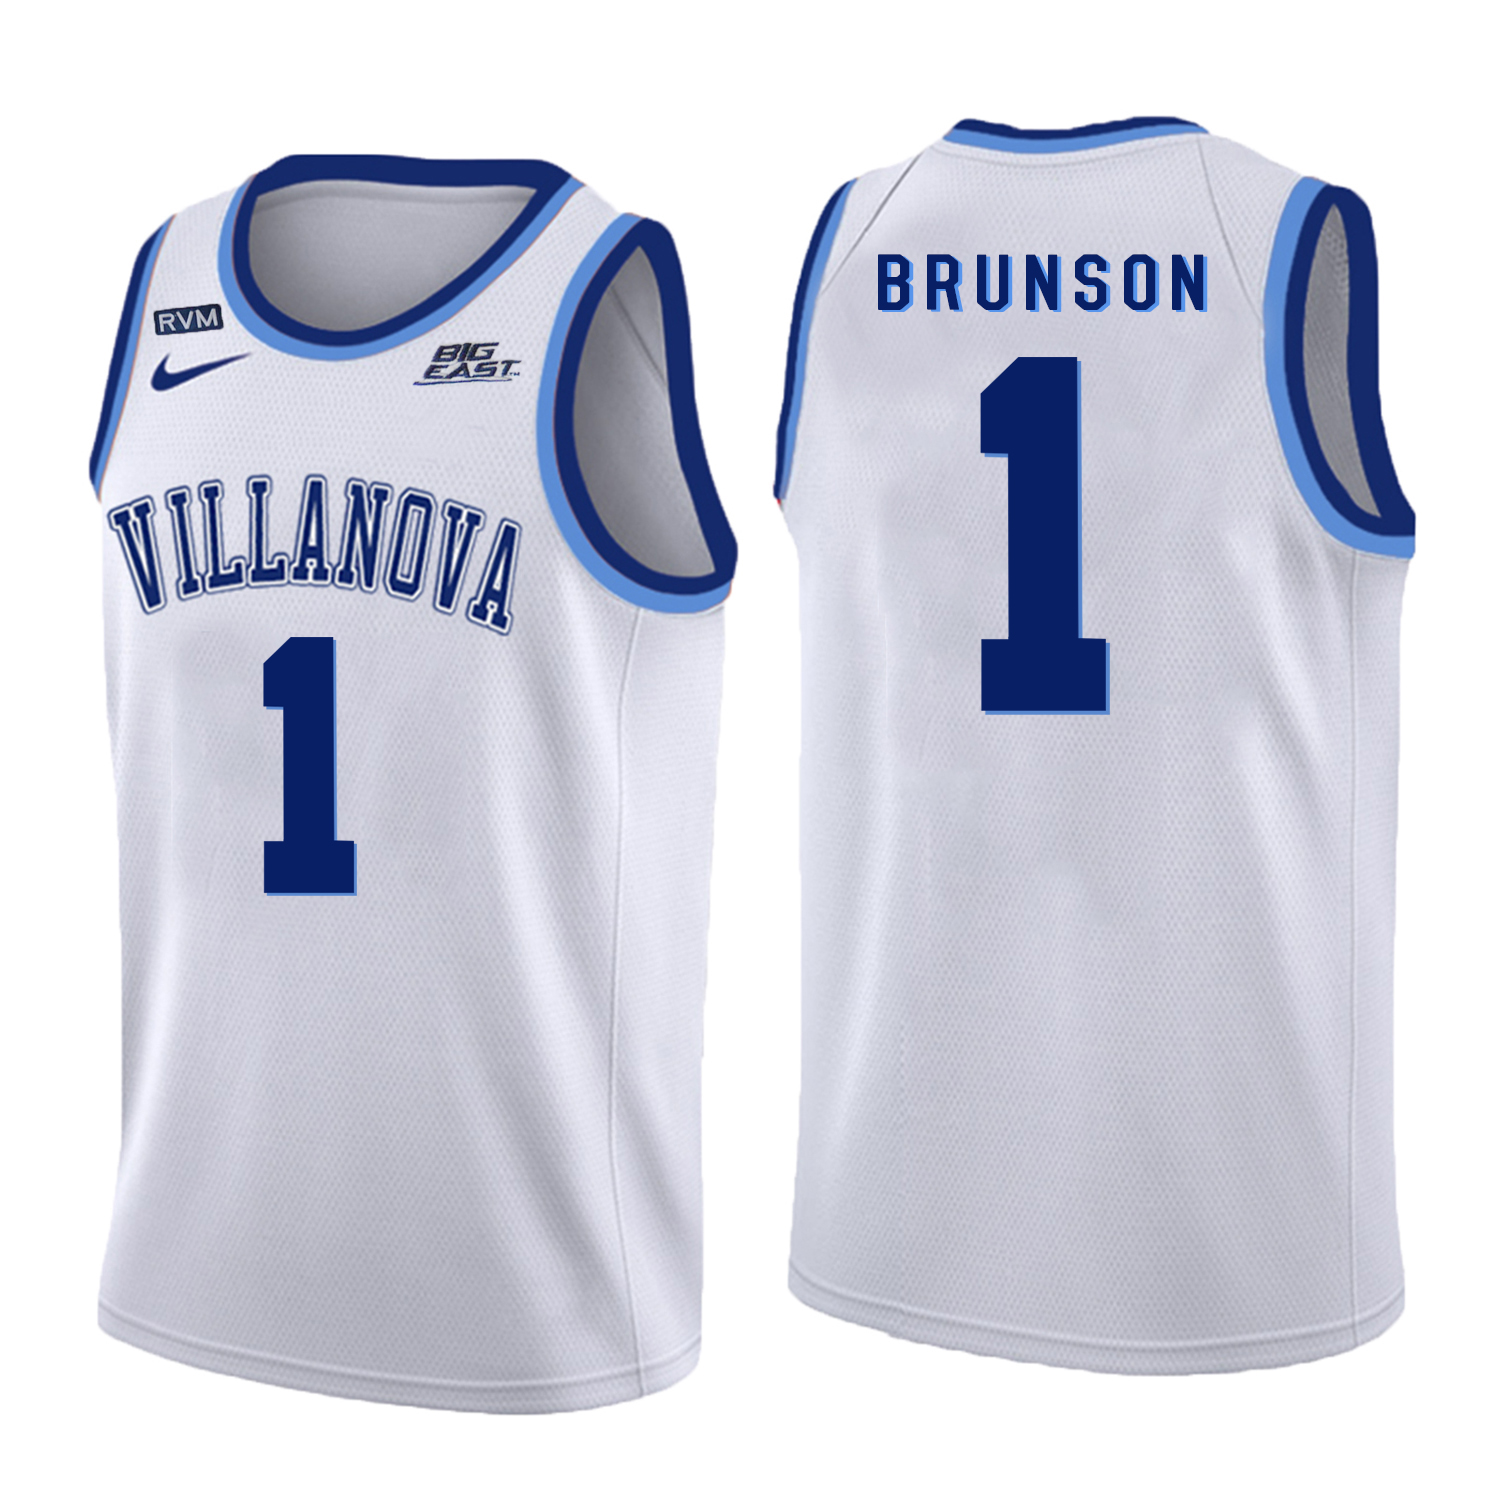 Villanova Wildcats 1 Jalen Brunson White College Basketball Jersey